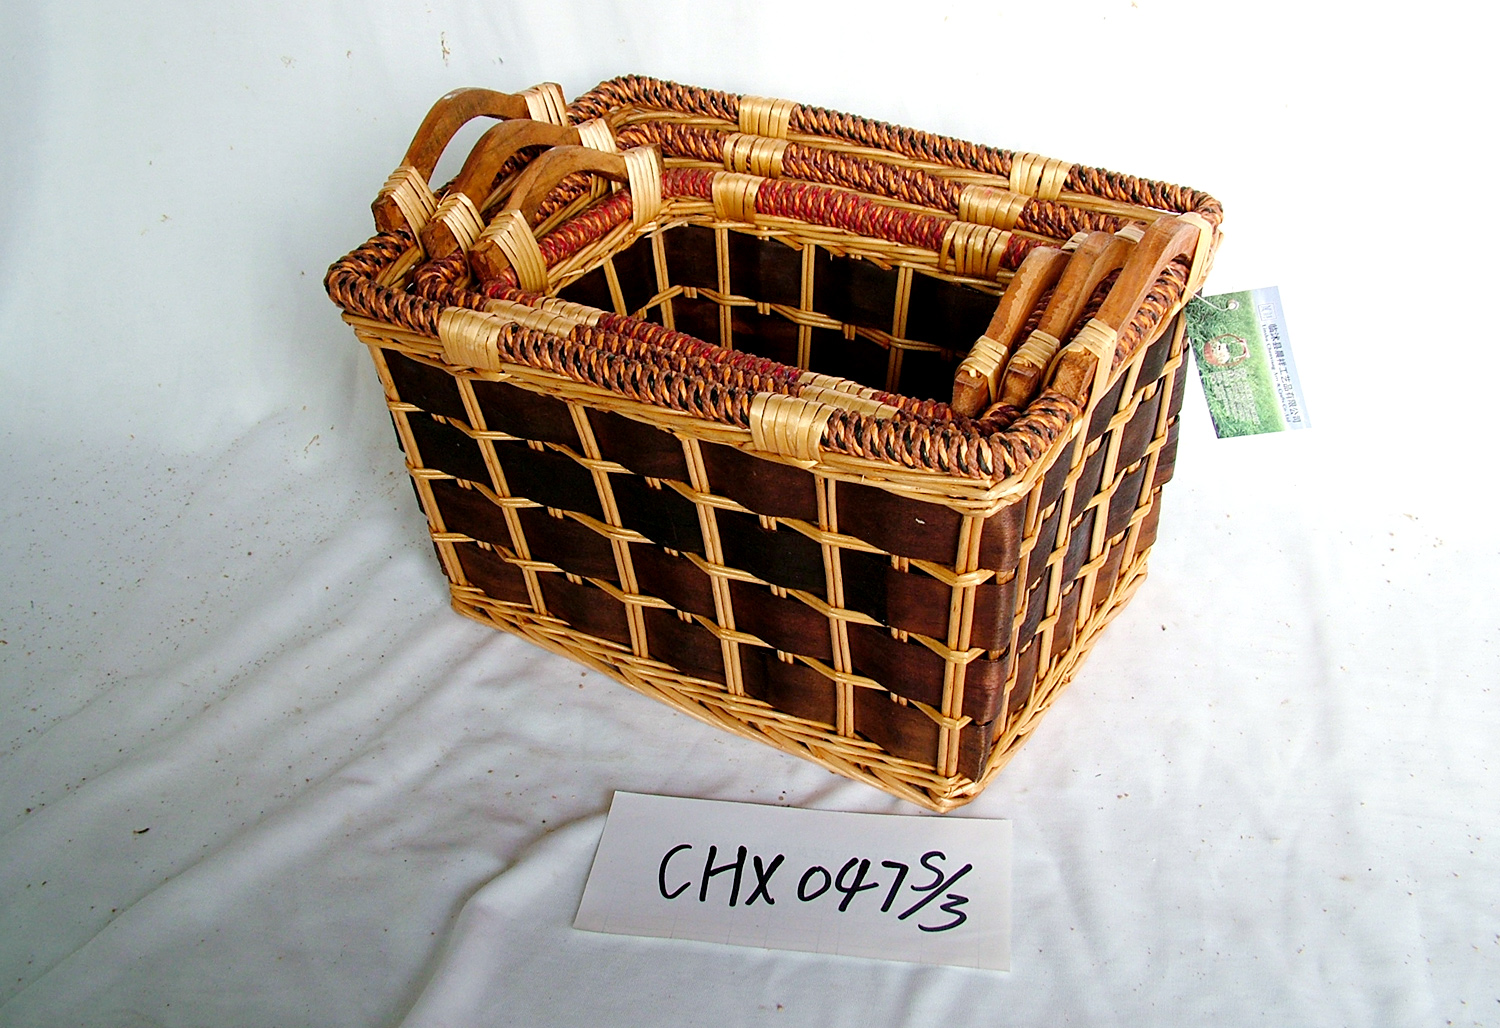 square basket